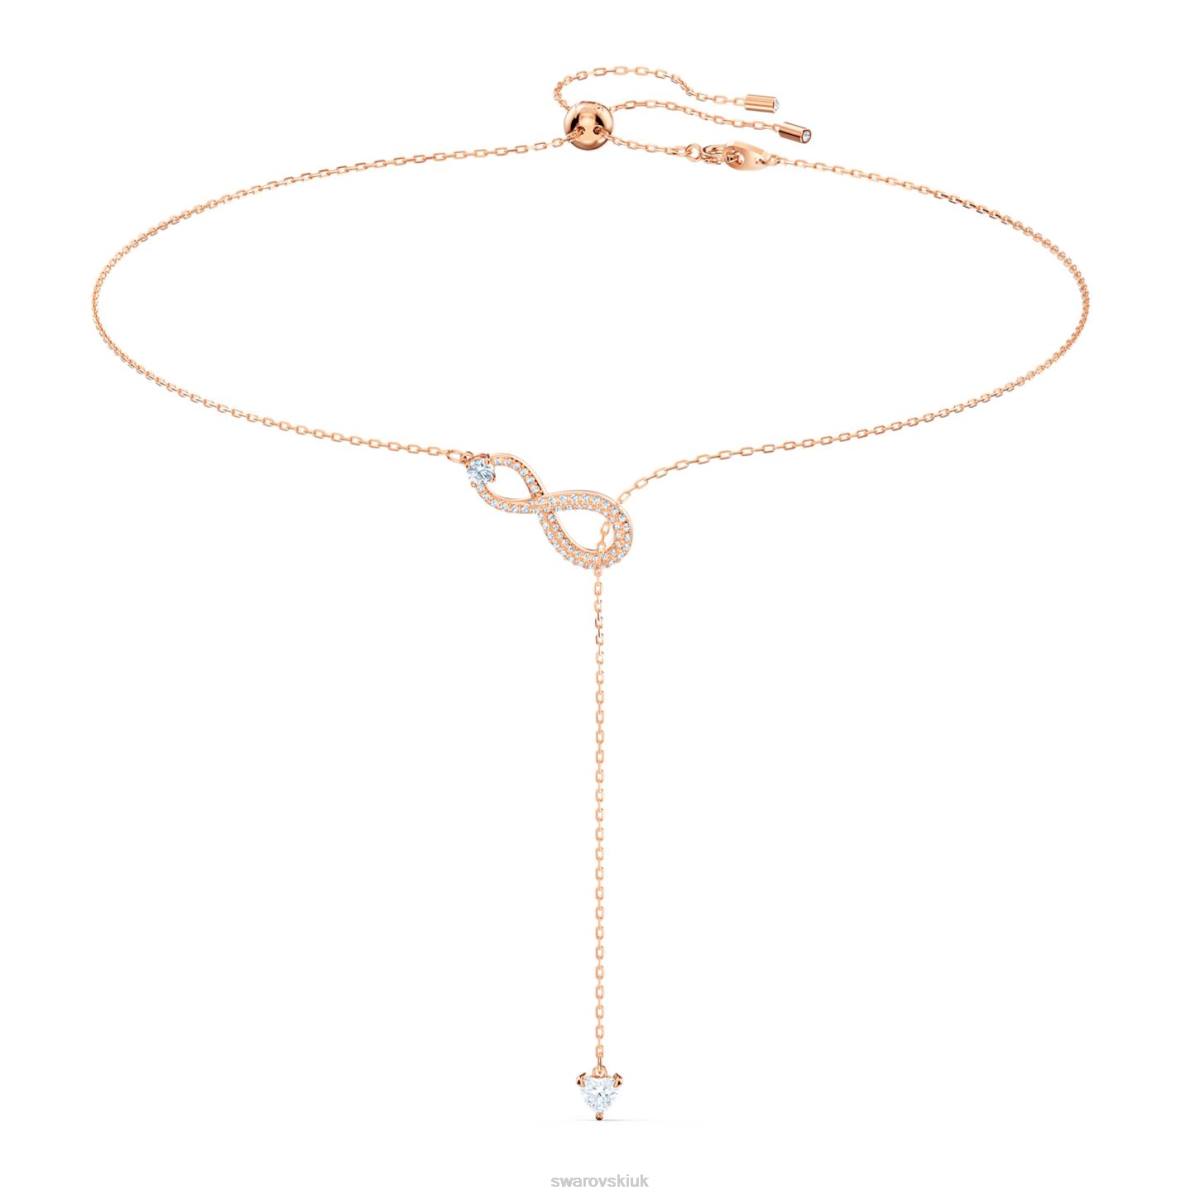 Jewelry Swarovski Infinity Y necklace Infinity, White, Rose gold-tone plated 48JX70